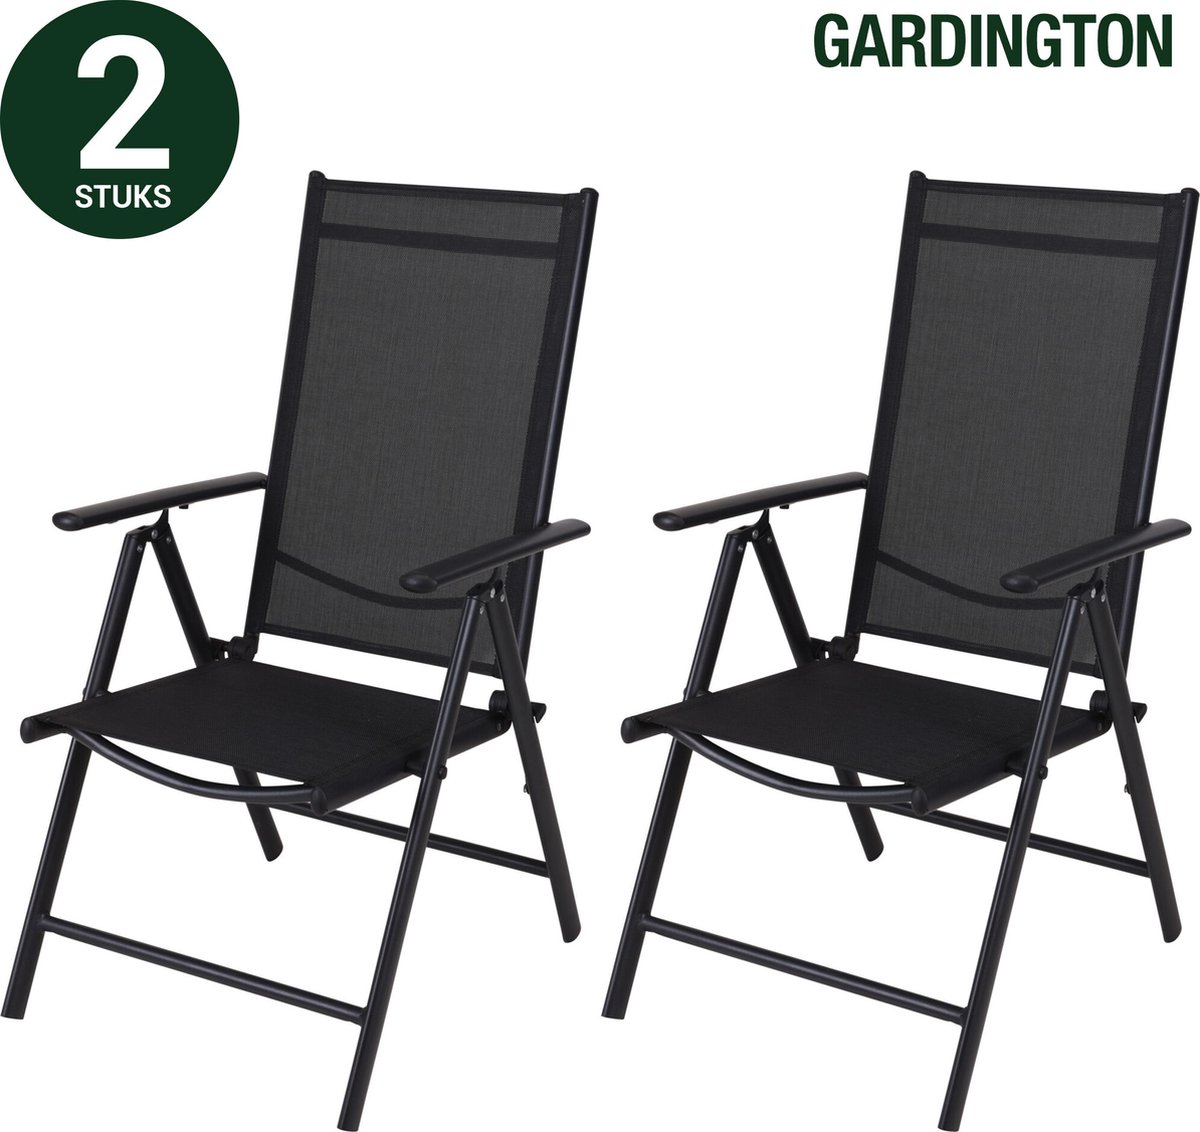 Gardington Tuinstoelen – Klapstoel – Vouwstoel voor op Terras Tuin Camping – Tuinset – Campingstoel – Tuinstoel – Verstelbaar en Opklapbaar – Antraciet – Set van 2